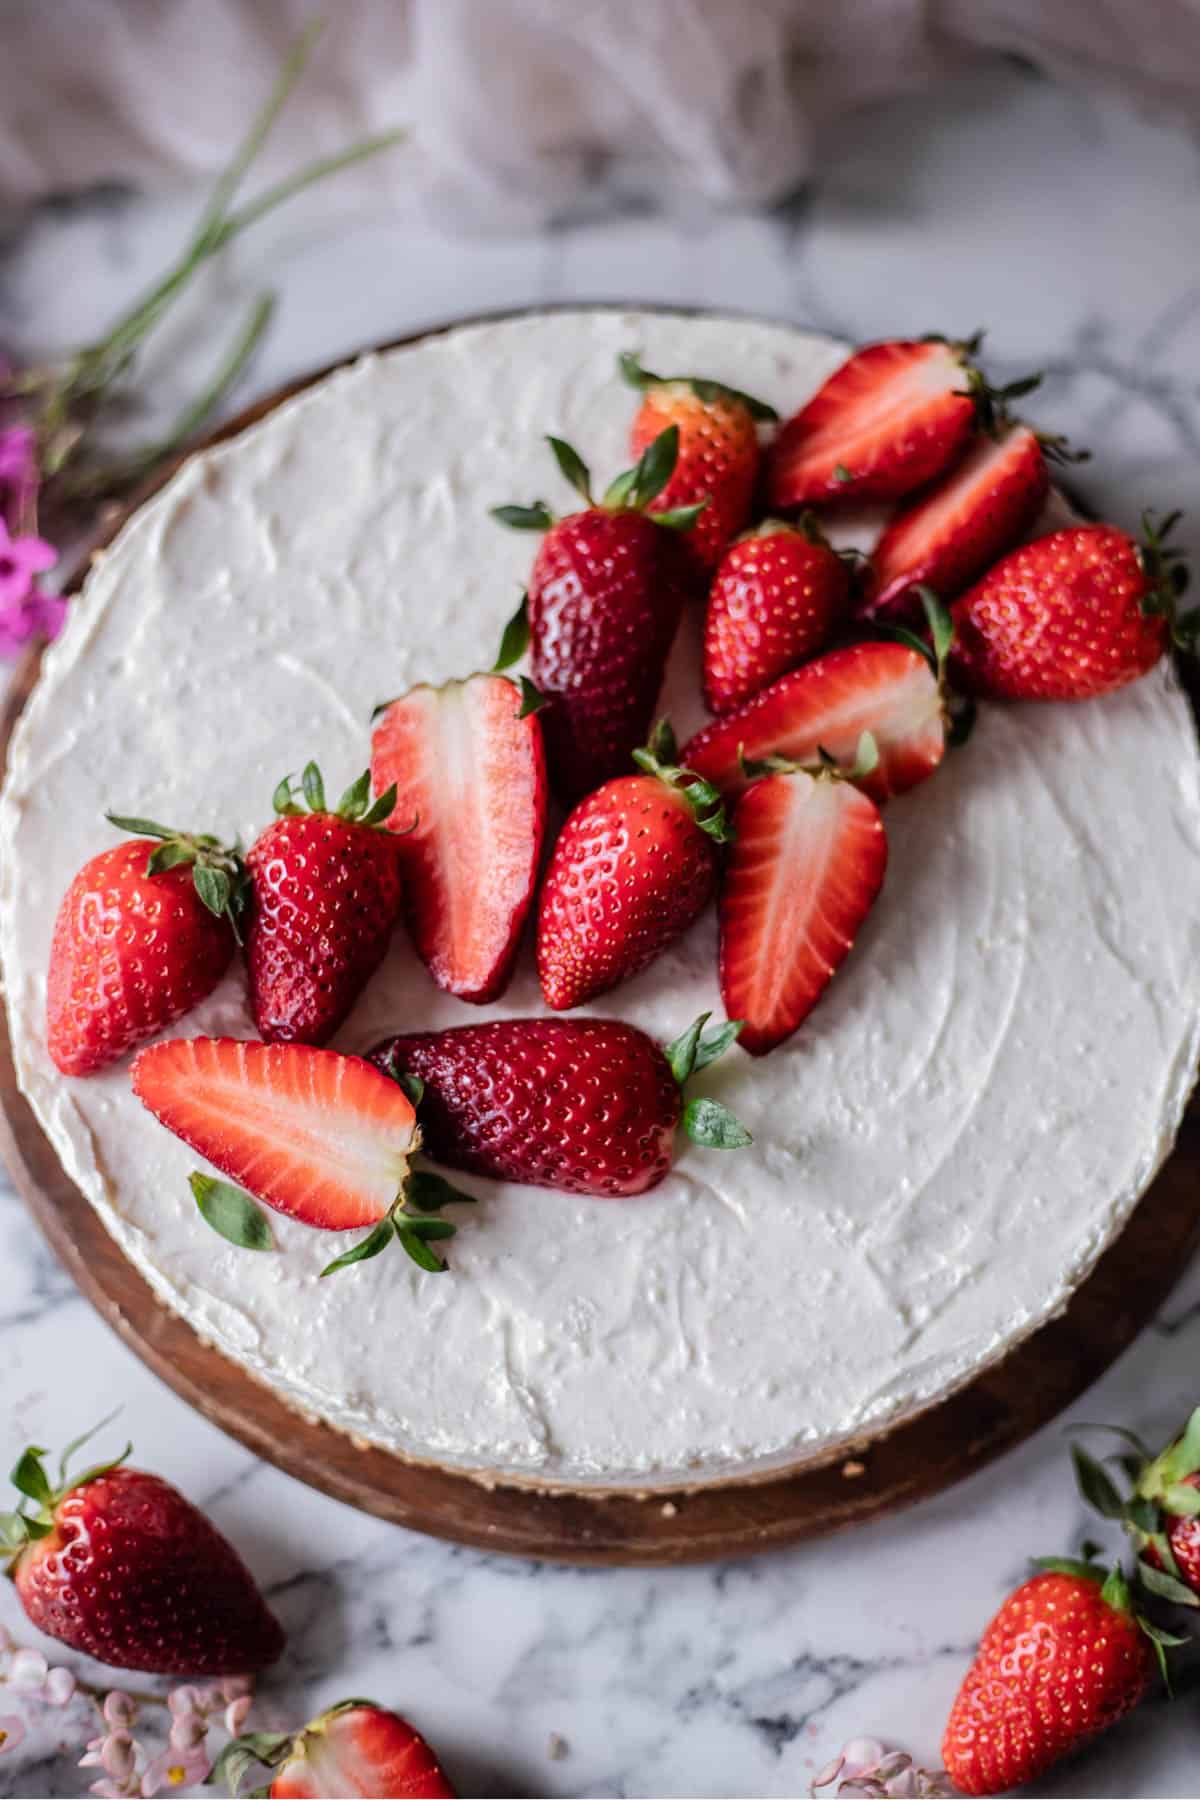 Gluten-free no-bake cheesecake decorated with fresh strawberries